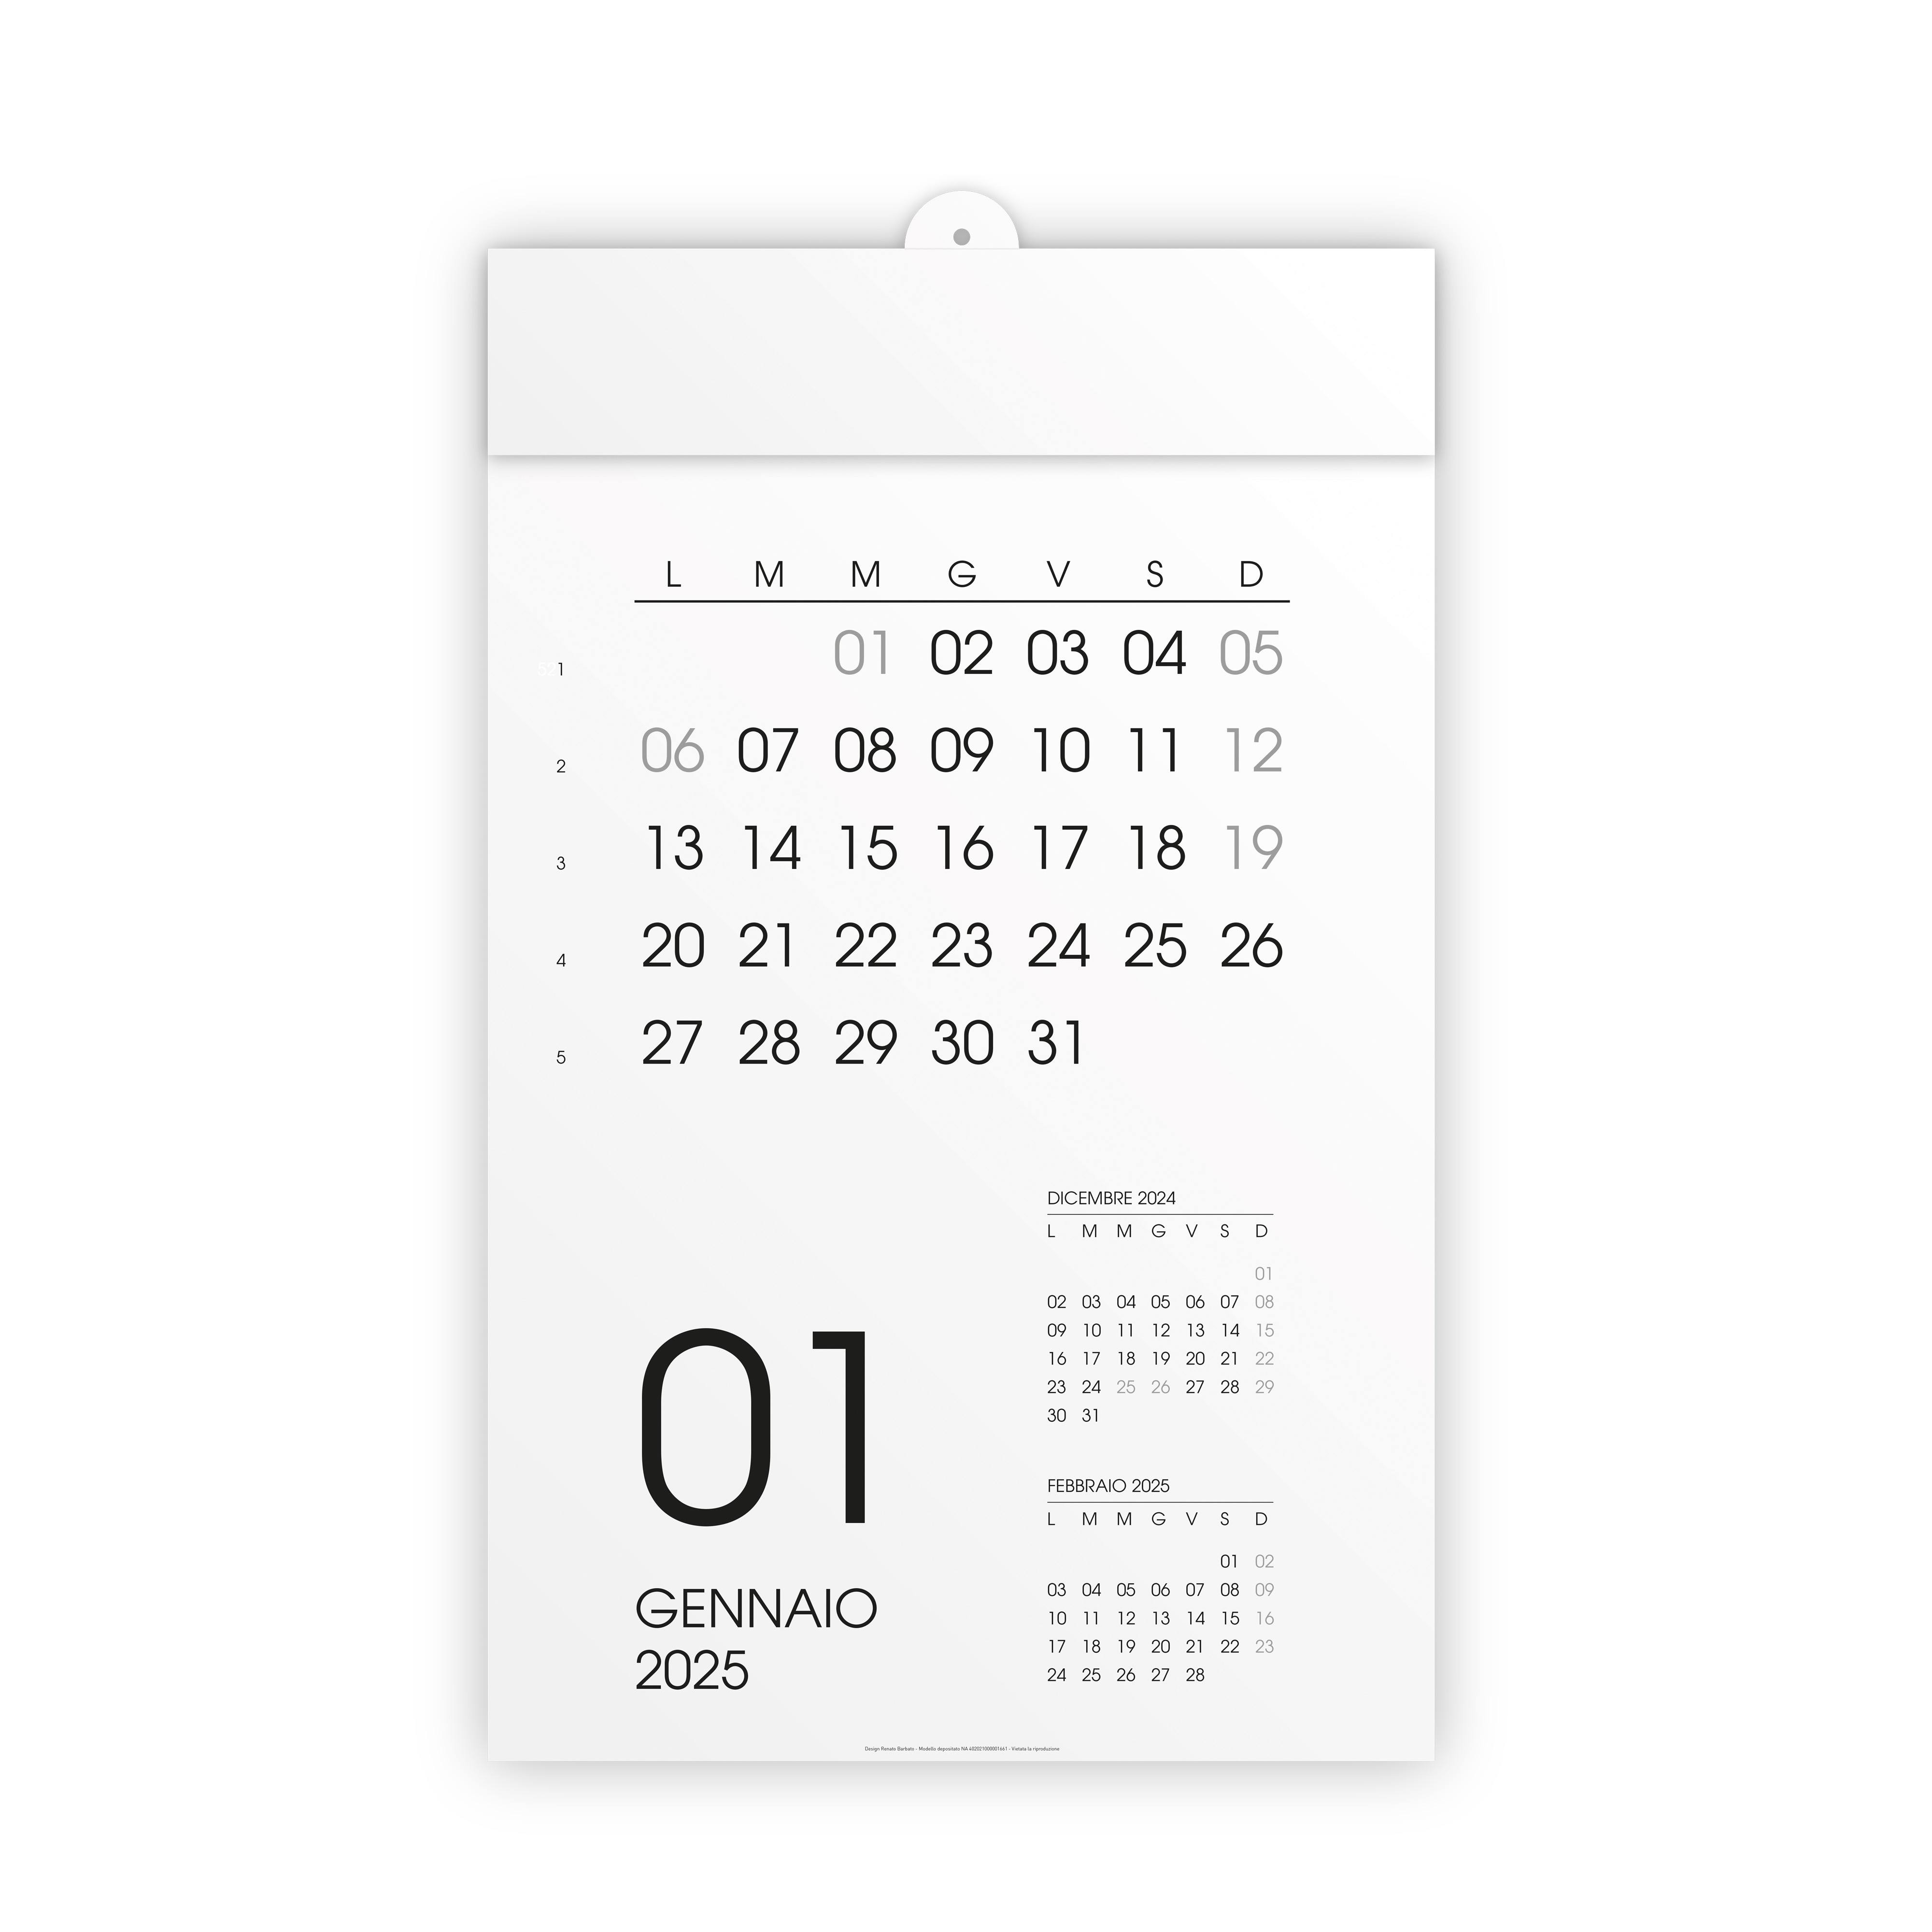 Calendario mensile da parete 2025, 12 mesi, su cartoncino bianco o nero, termosaldato